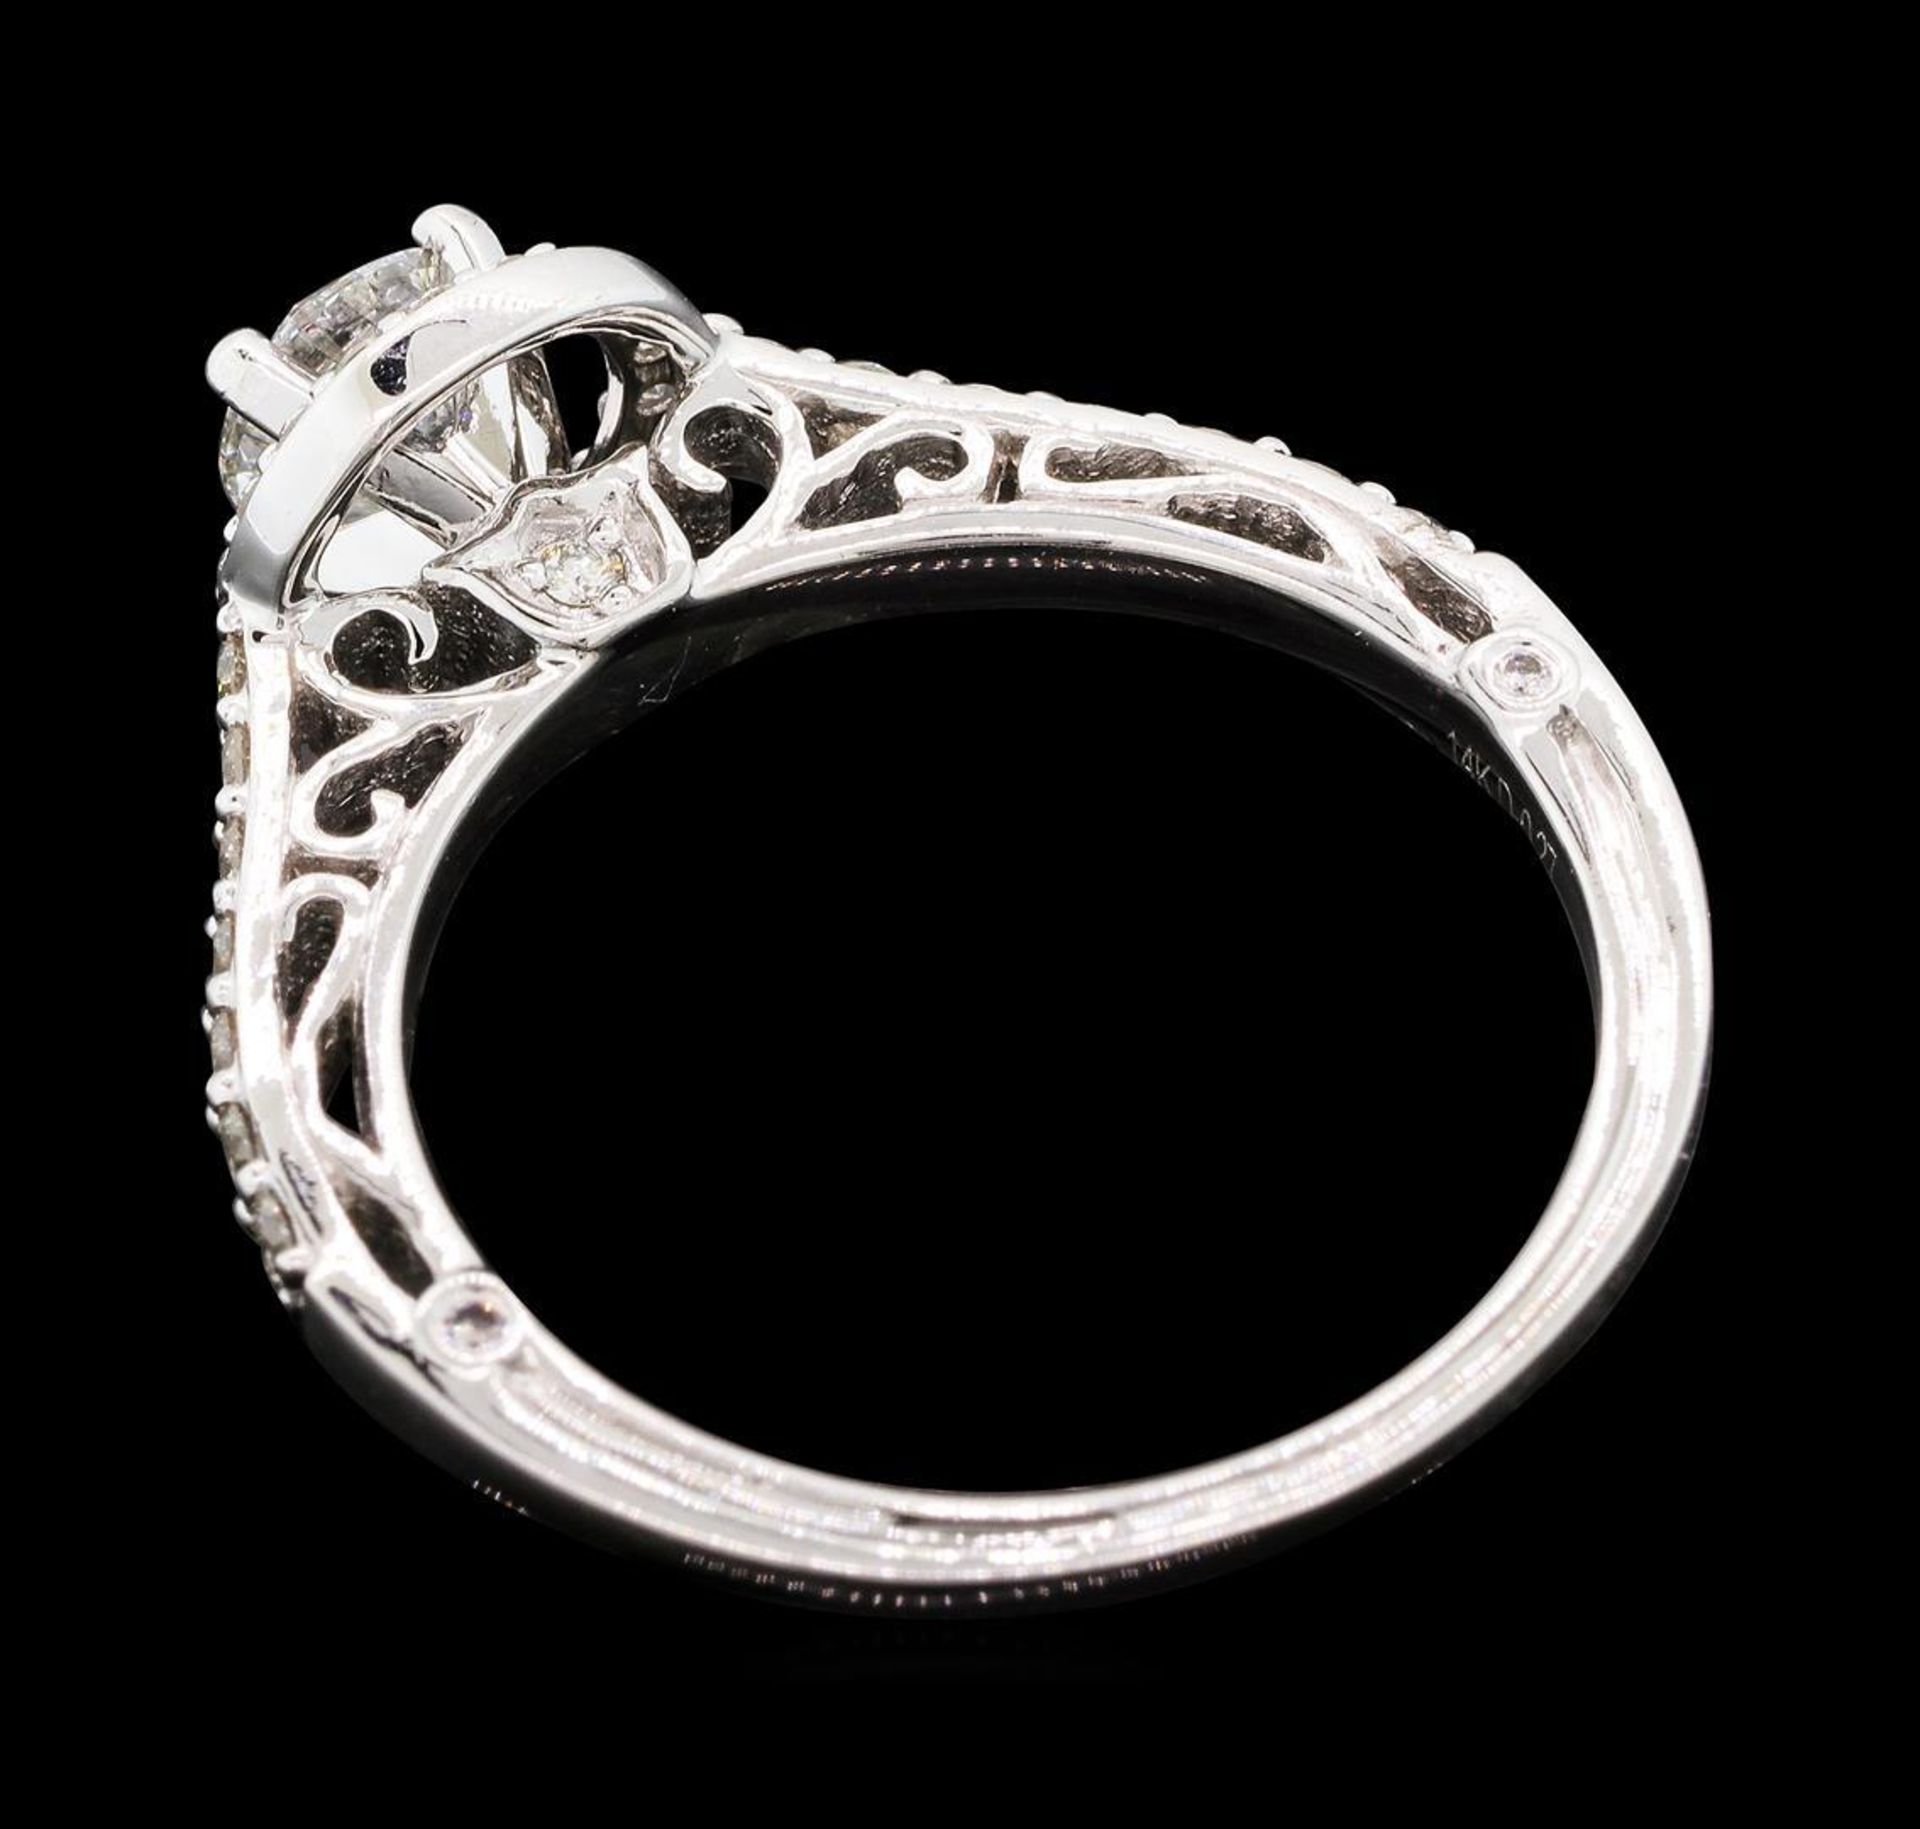 0.79 ctw Diamond Ring - 14KT White Gold - Image 3 of 5